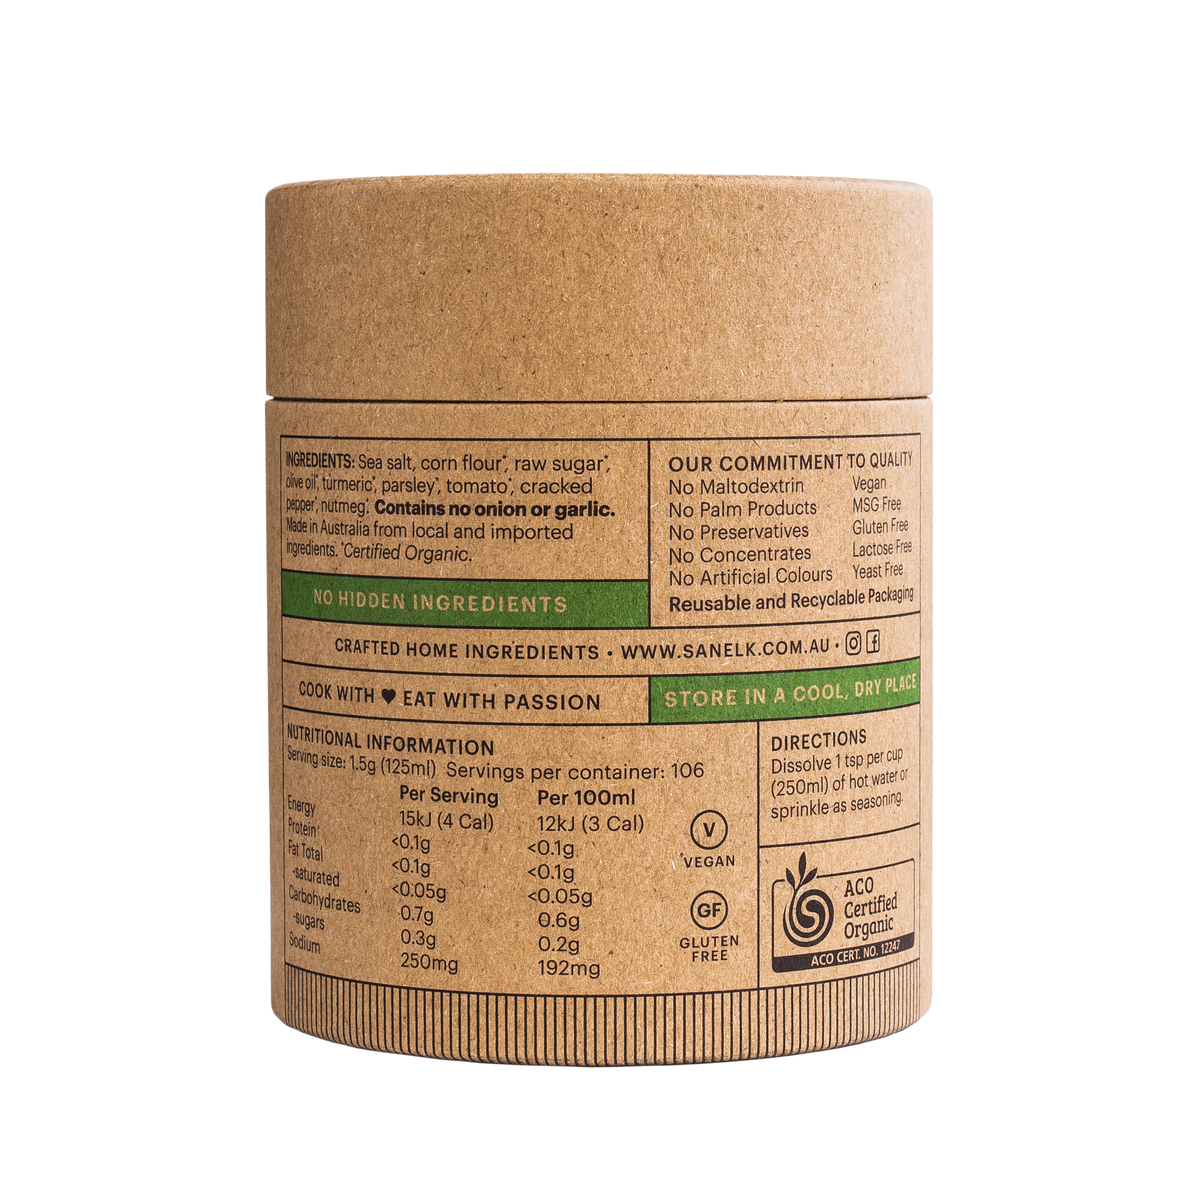 (CLEARANCE!) San Elk Certified Organic Low FODMAP Vegetable Stock